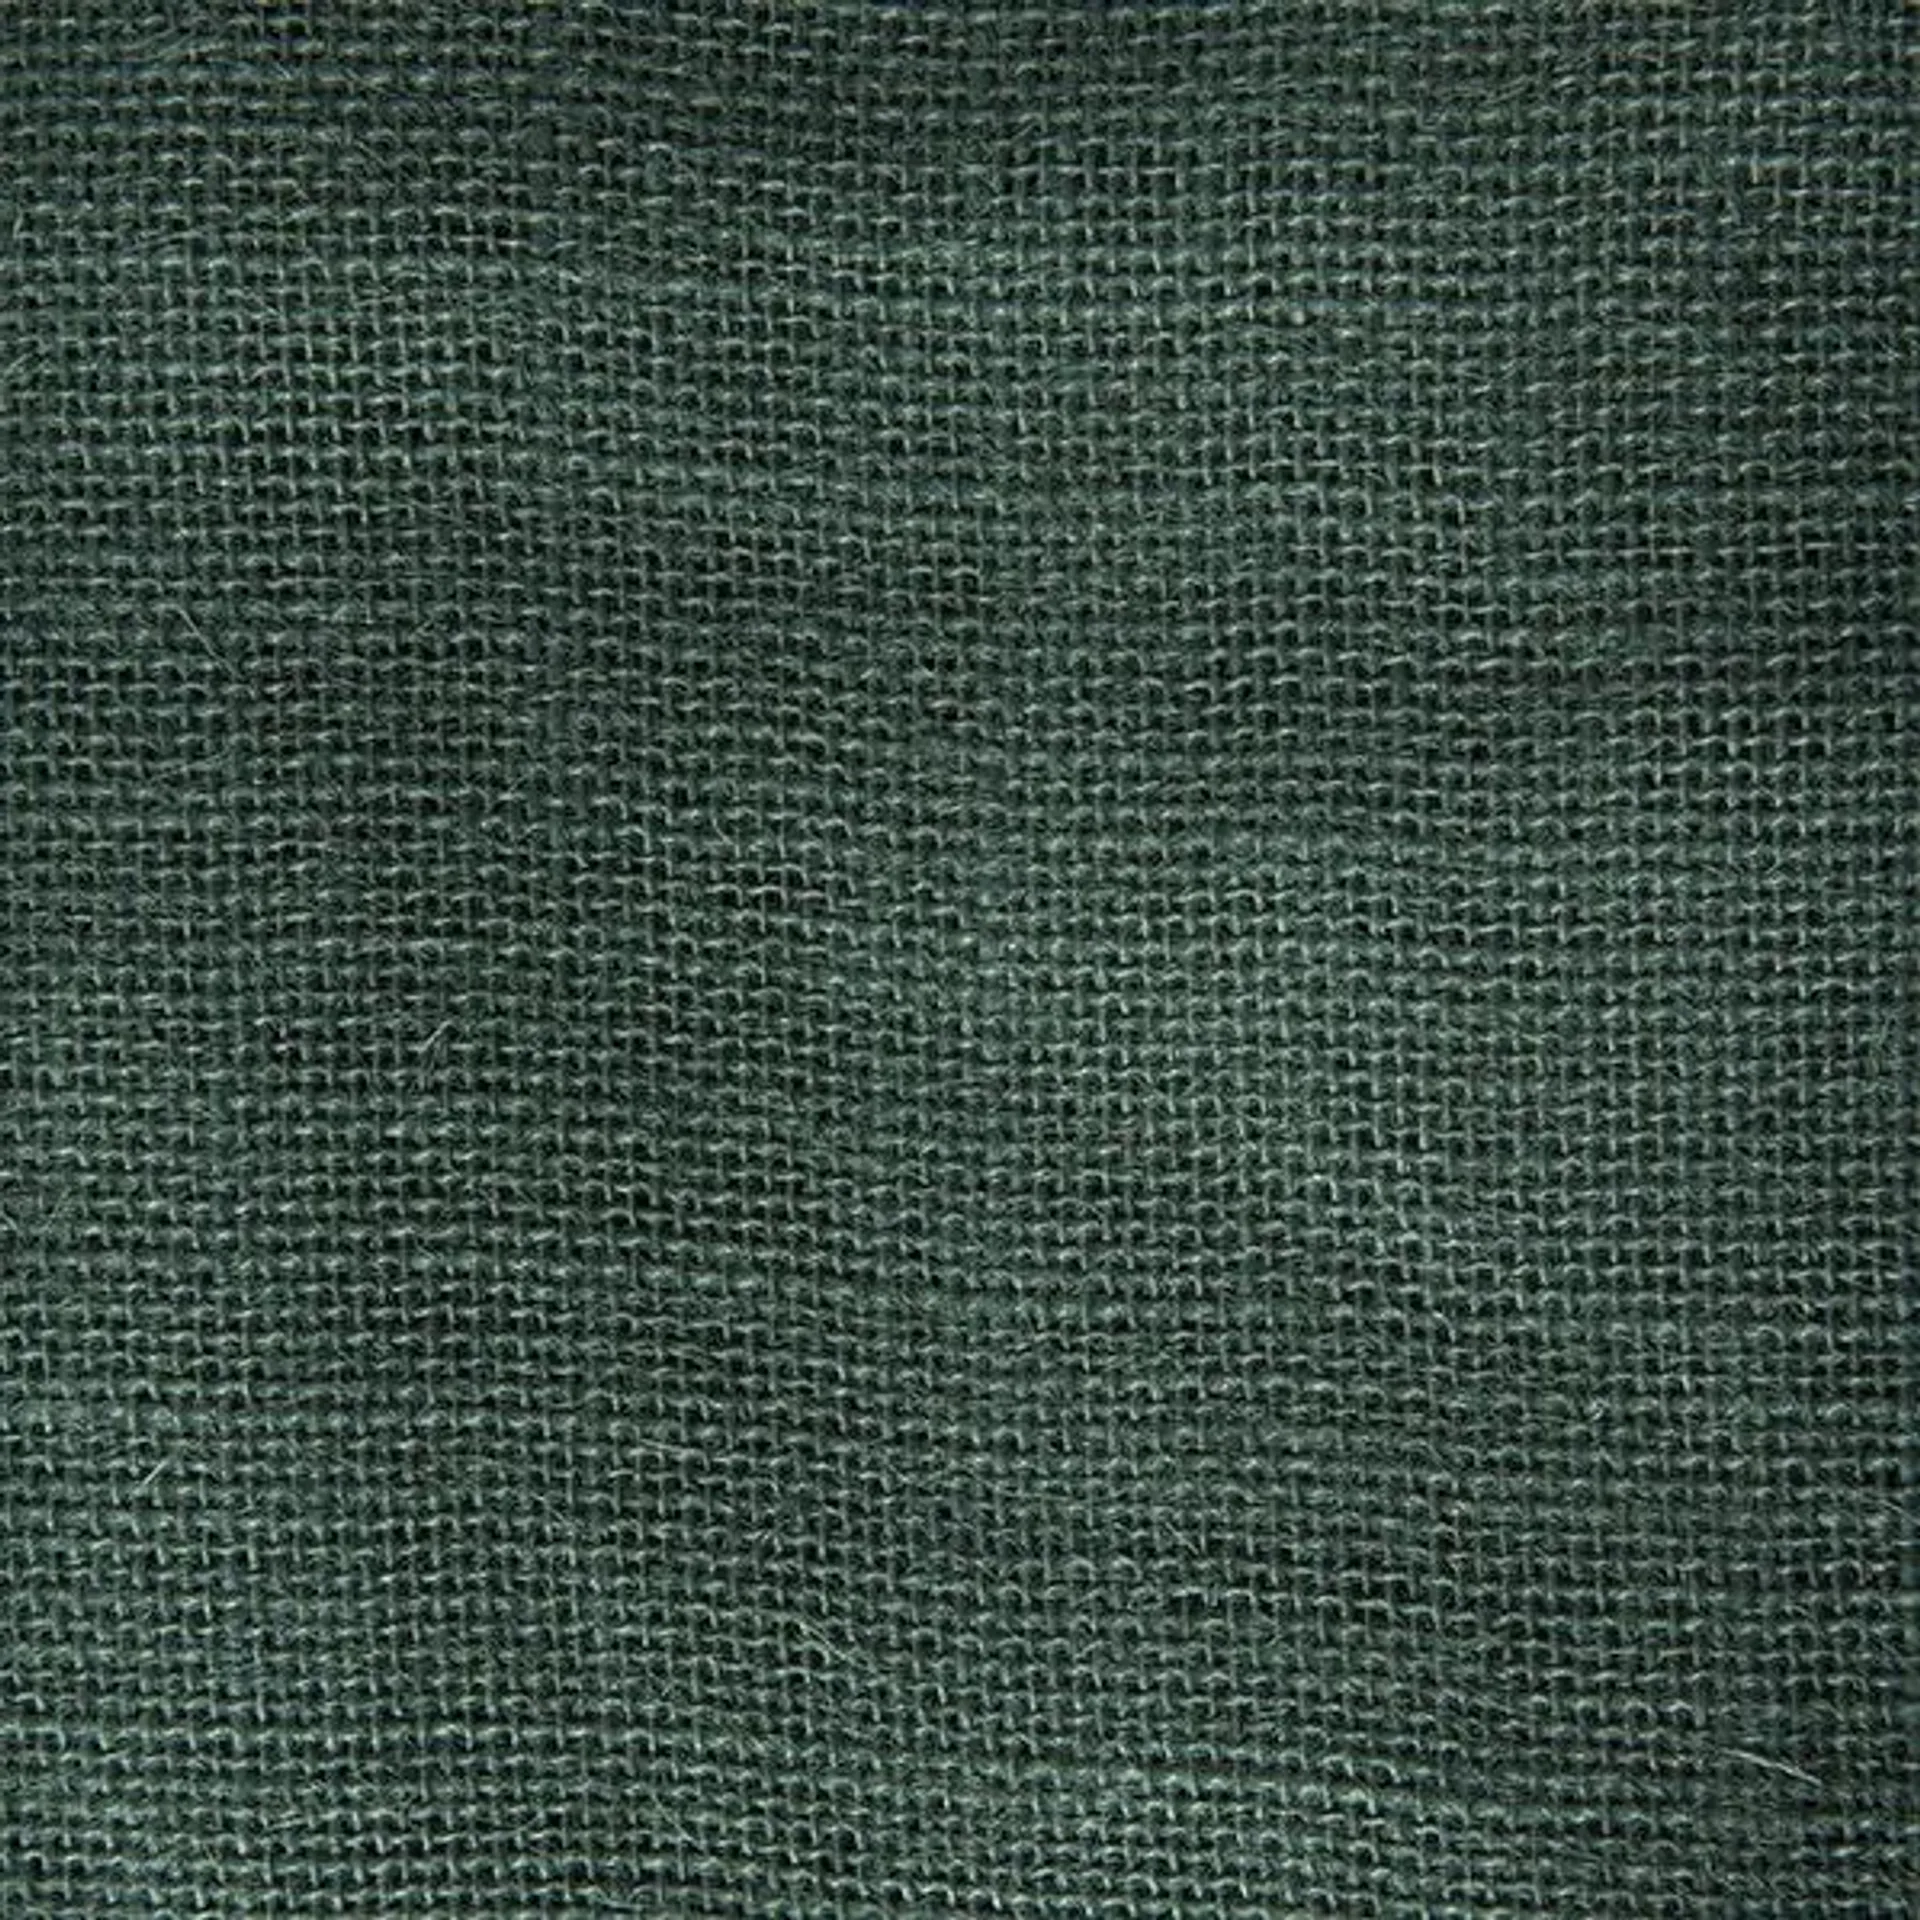 Hessian Fabric, Green- Width 120cm